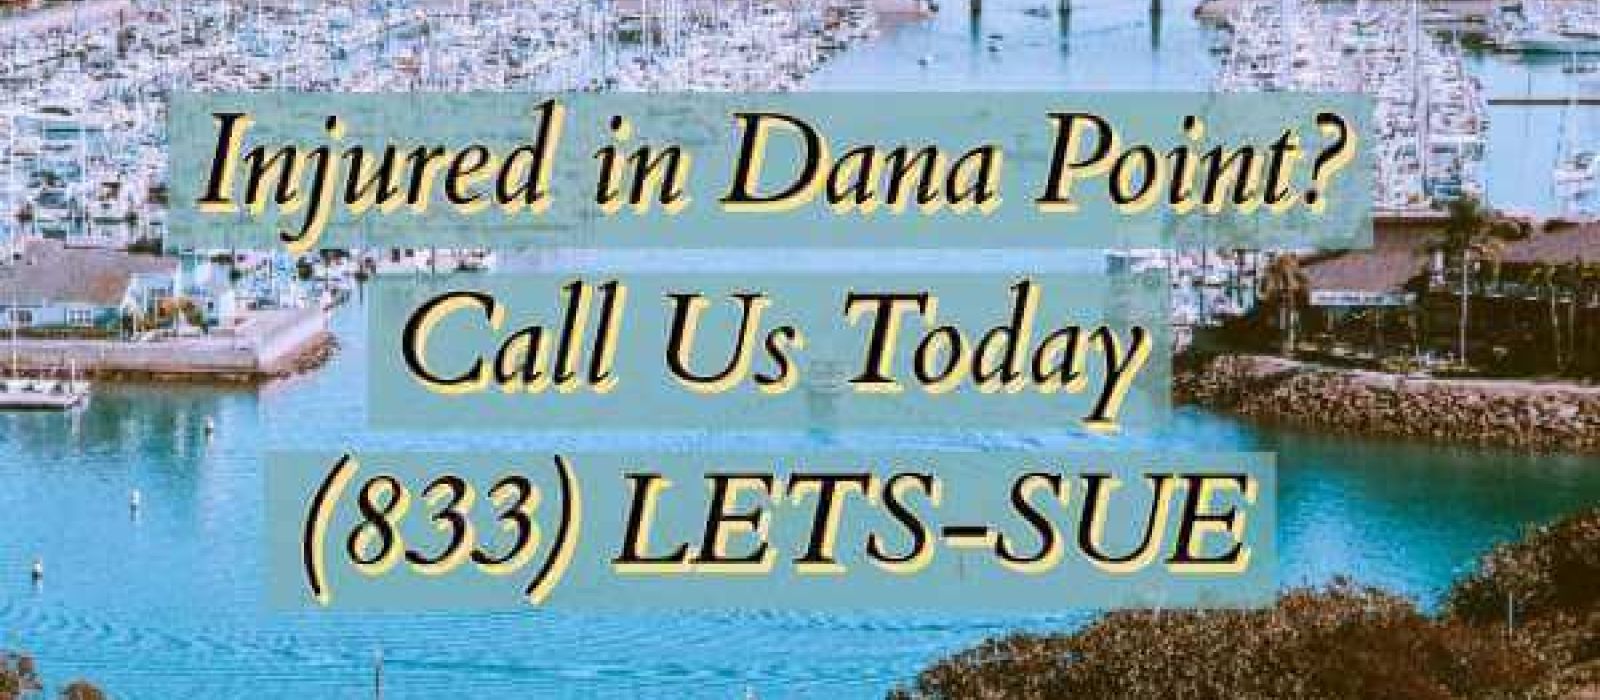 Contact Dana Point Injury Lawyers